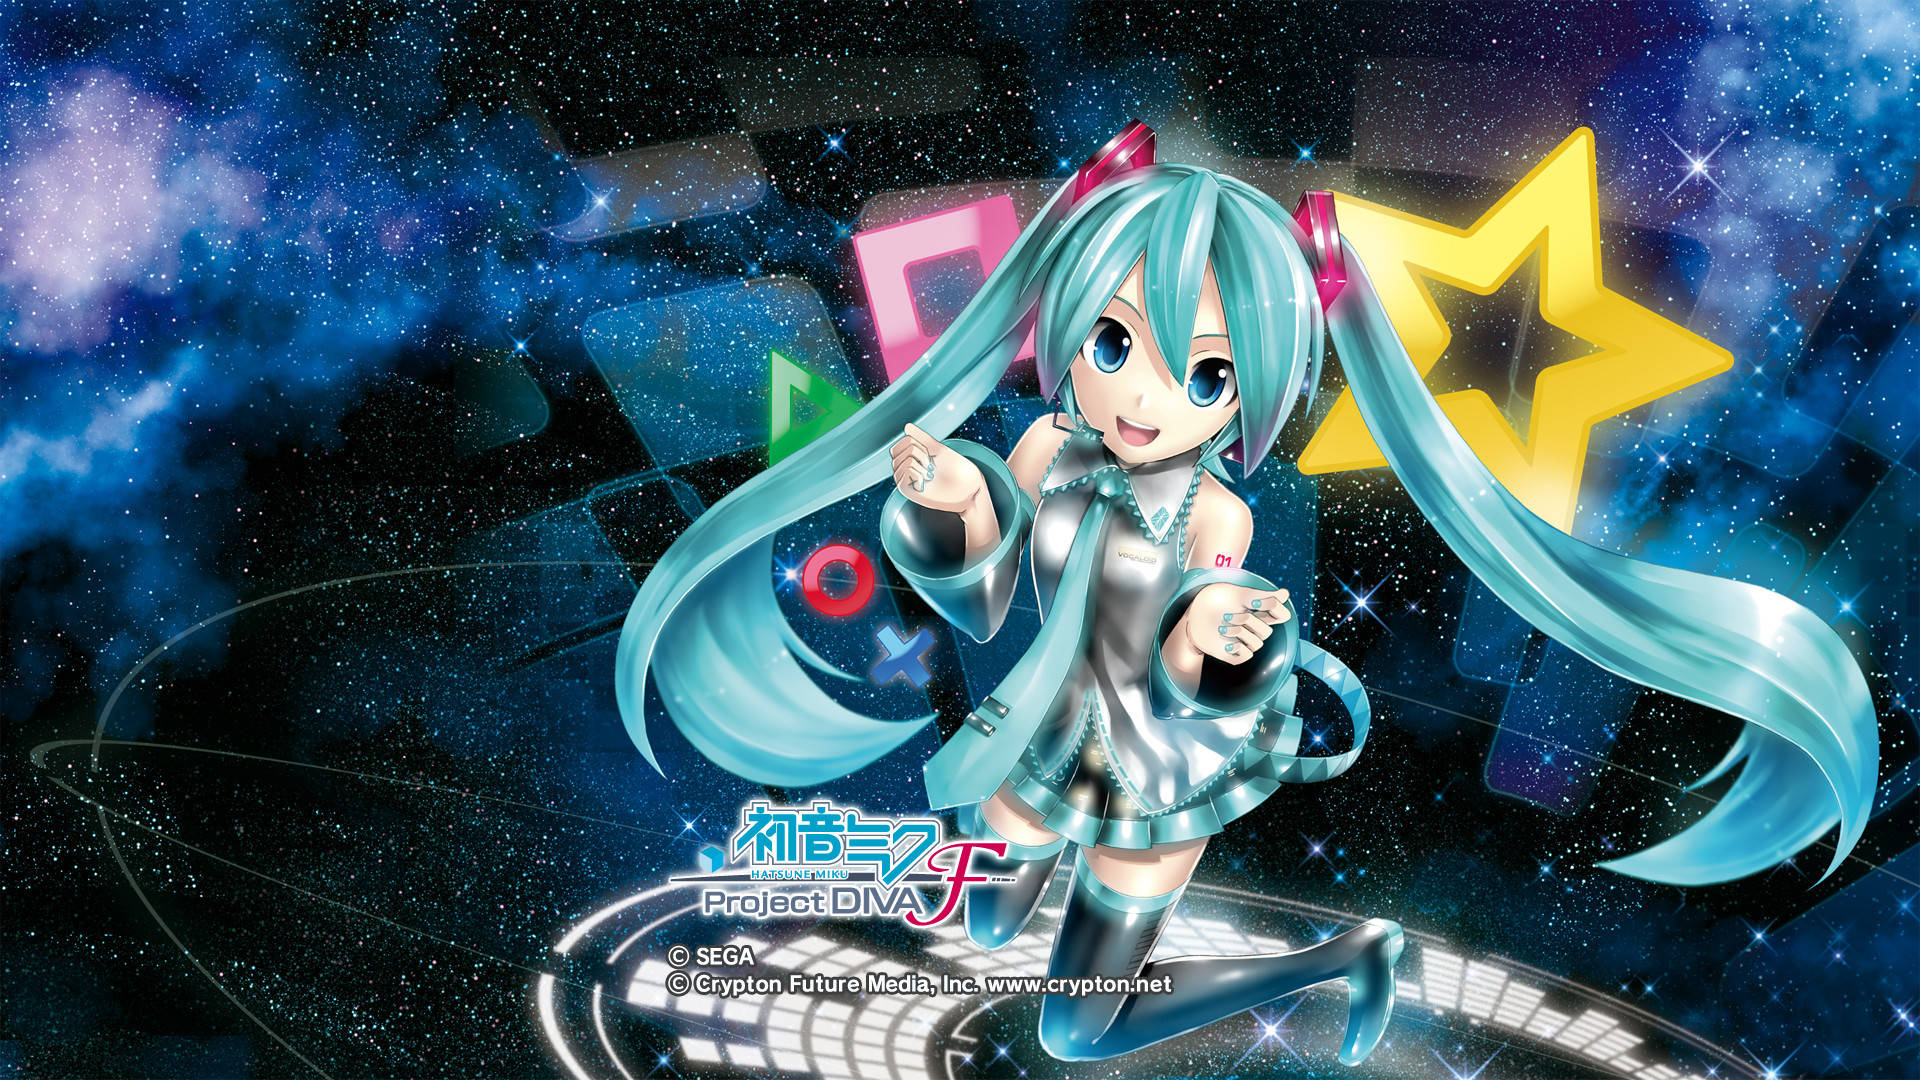 Hatsune Miku, the iconic virtual Vocaloid singer. Wallpaper